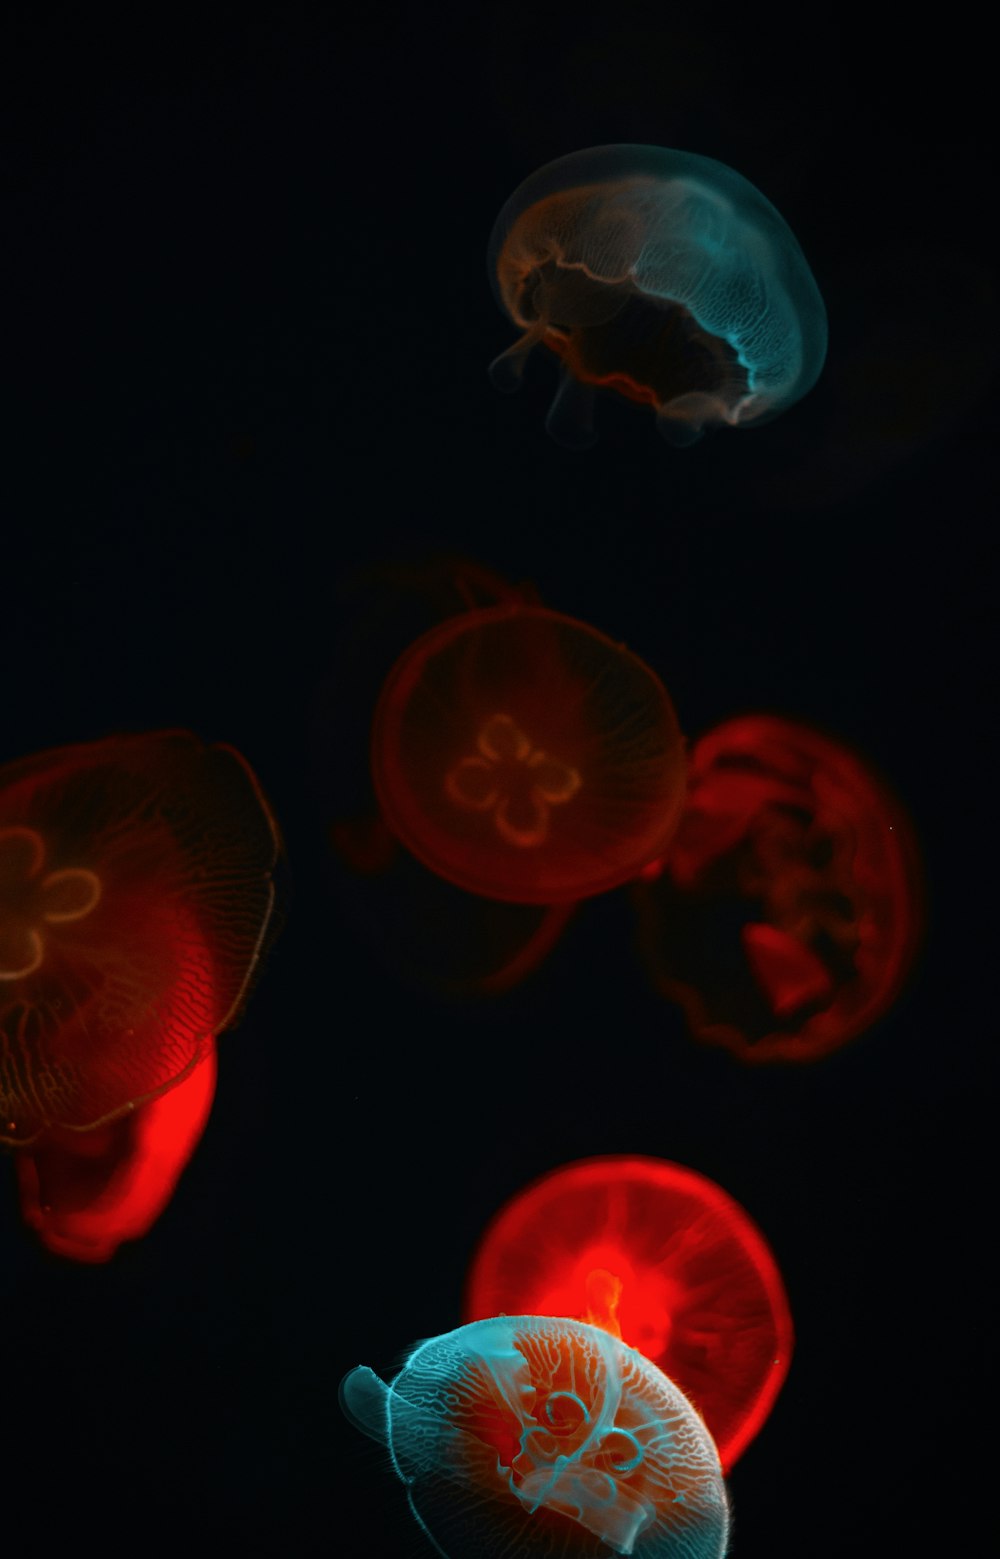 red jellyfish in dark room